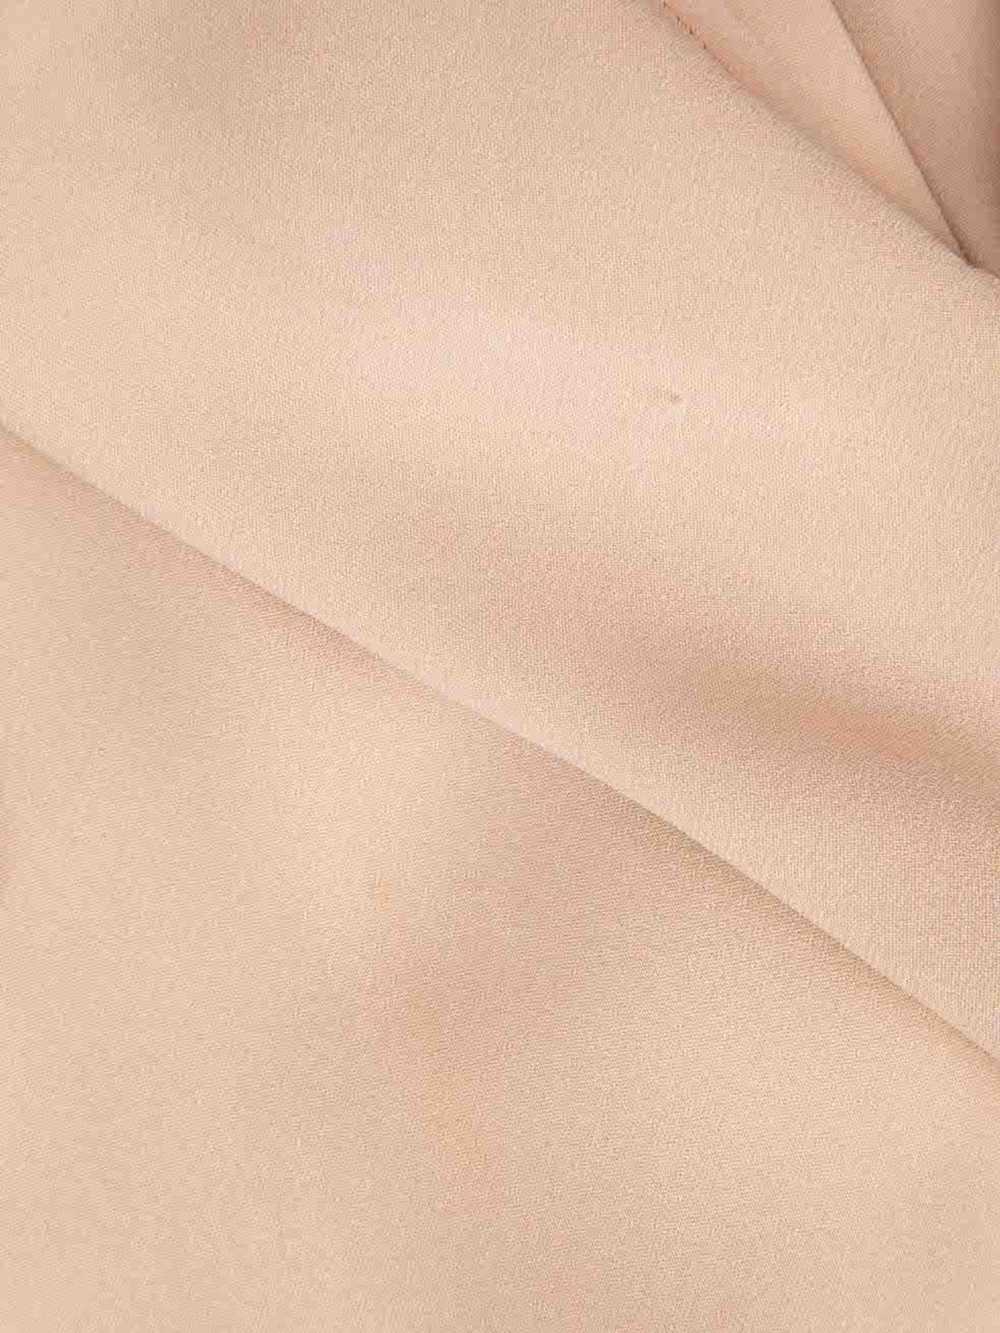 Stella McCartney Pink Draped Knee Length Dress - image 5